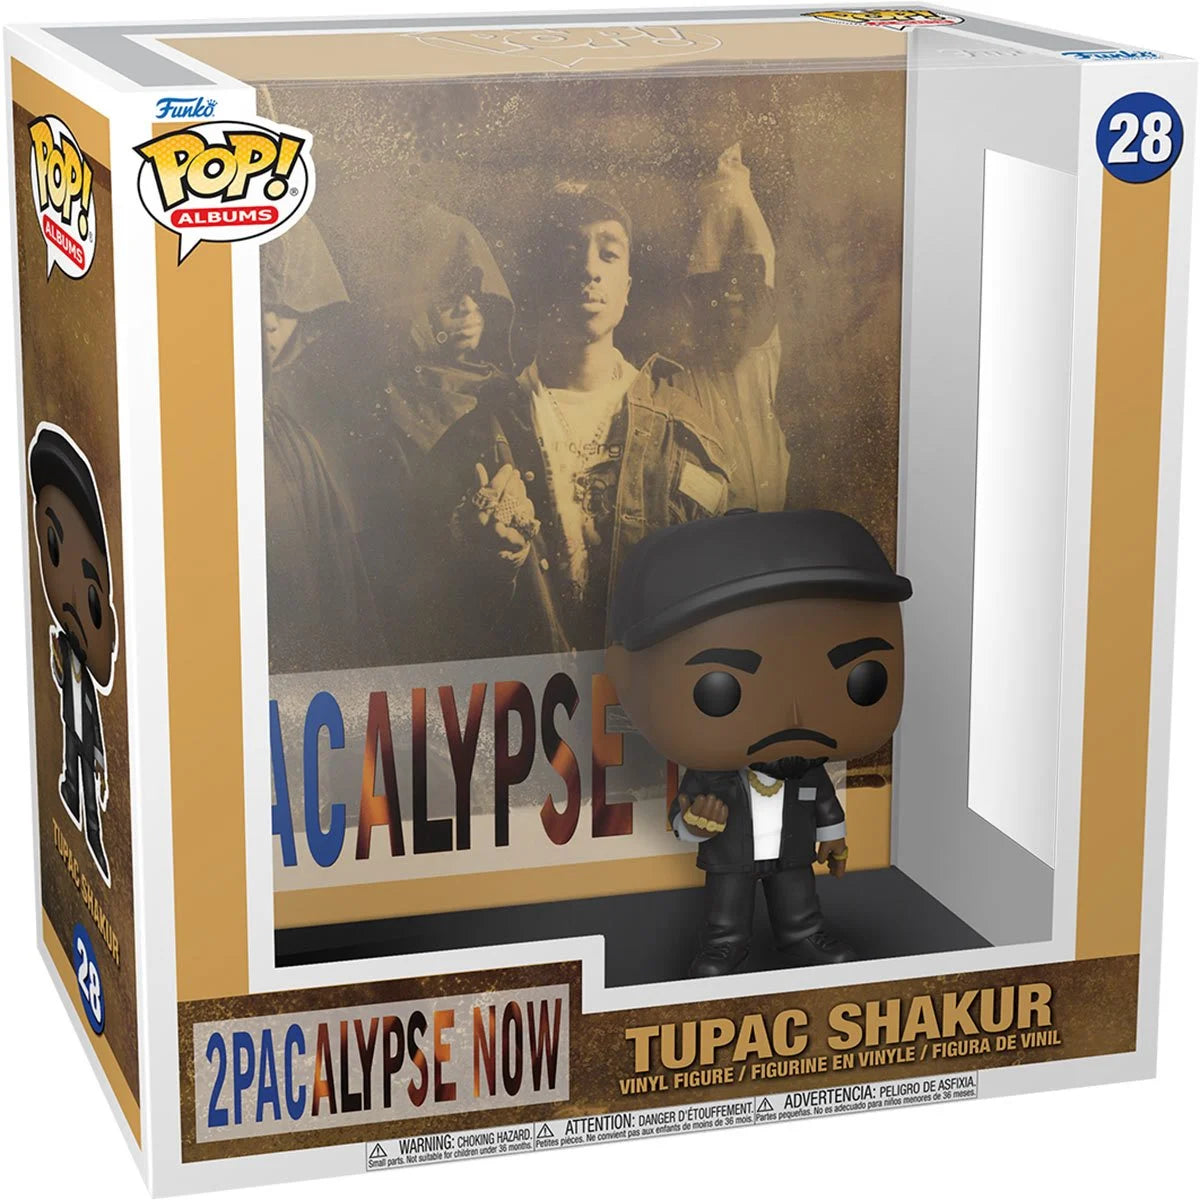 Funko Tupac Shakur 2pacalypse Now Album Figure with Case